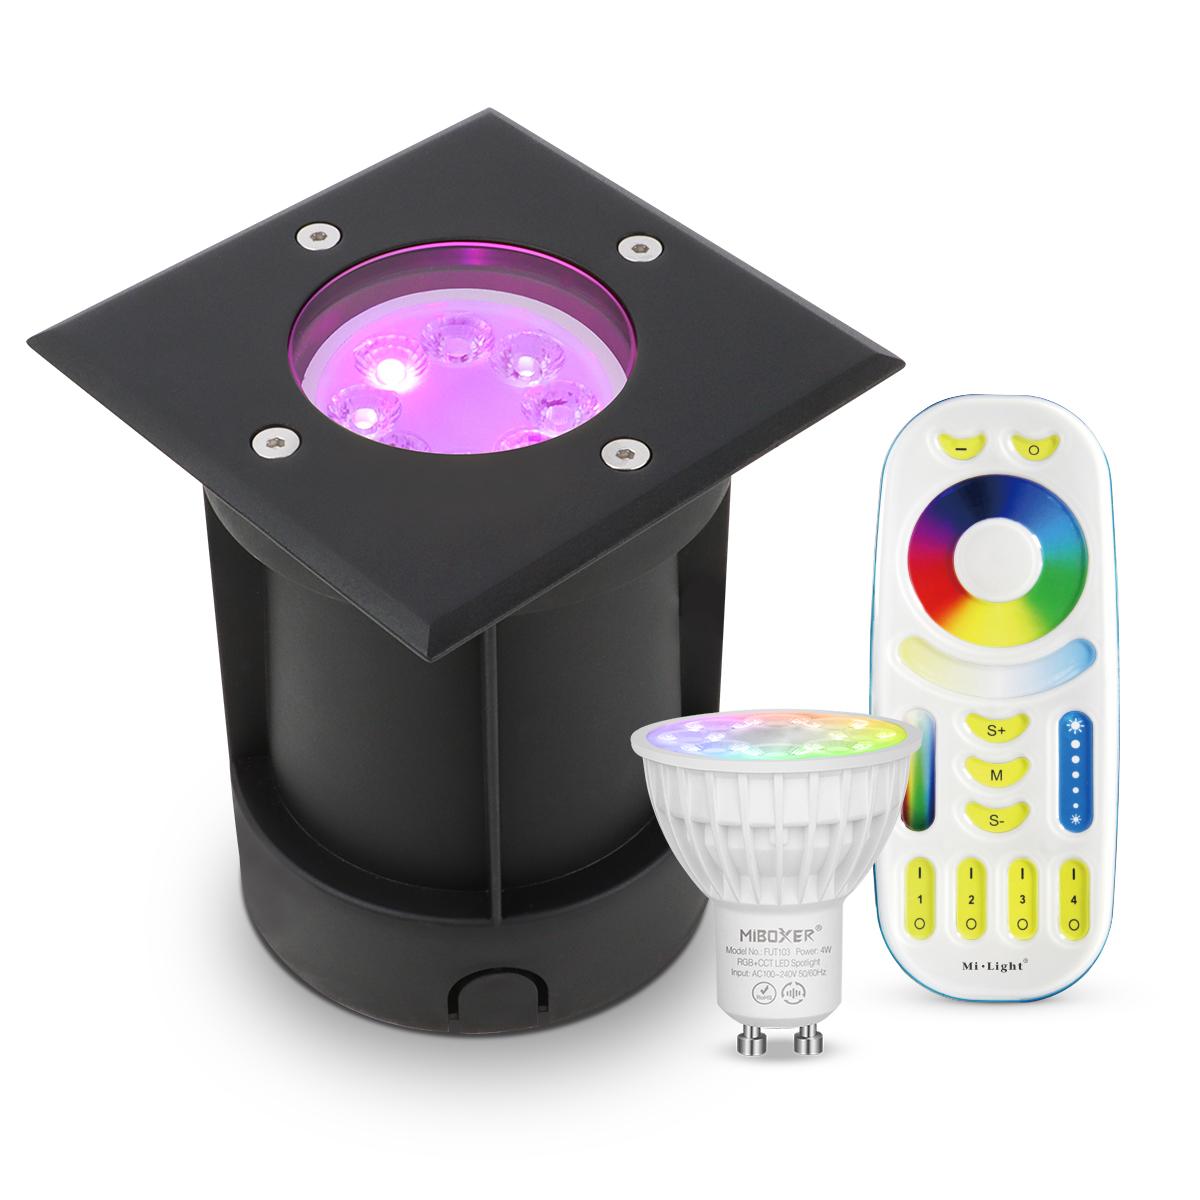 LED Bodeneinbaustrahler Schwarz eckig 230V IP67 - Leuchtmittel: GU10 RGB+CCT DIMMBAR inkl. Fernbedienung - Anzahl: 1x